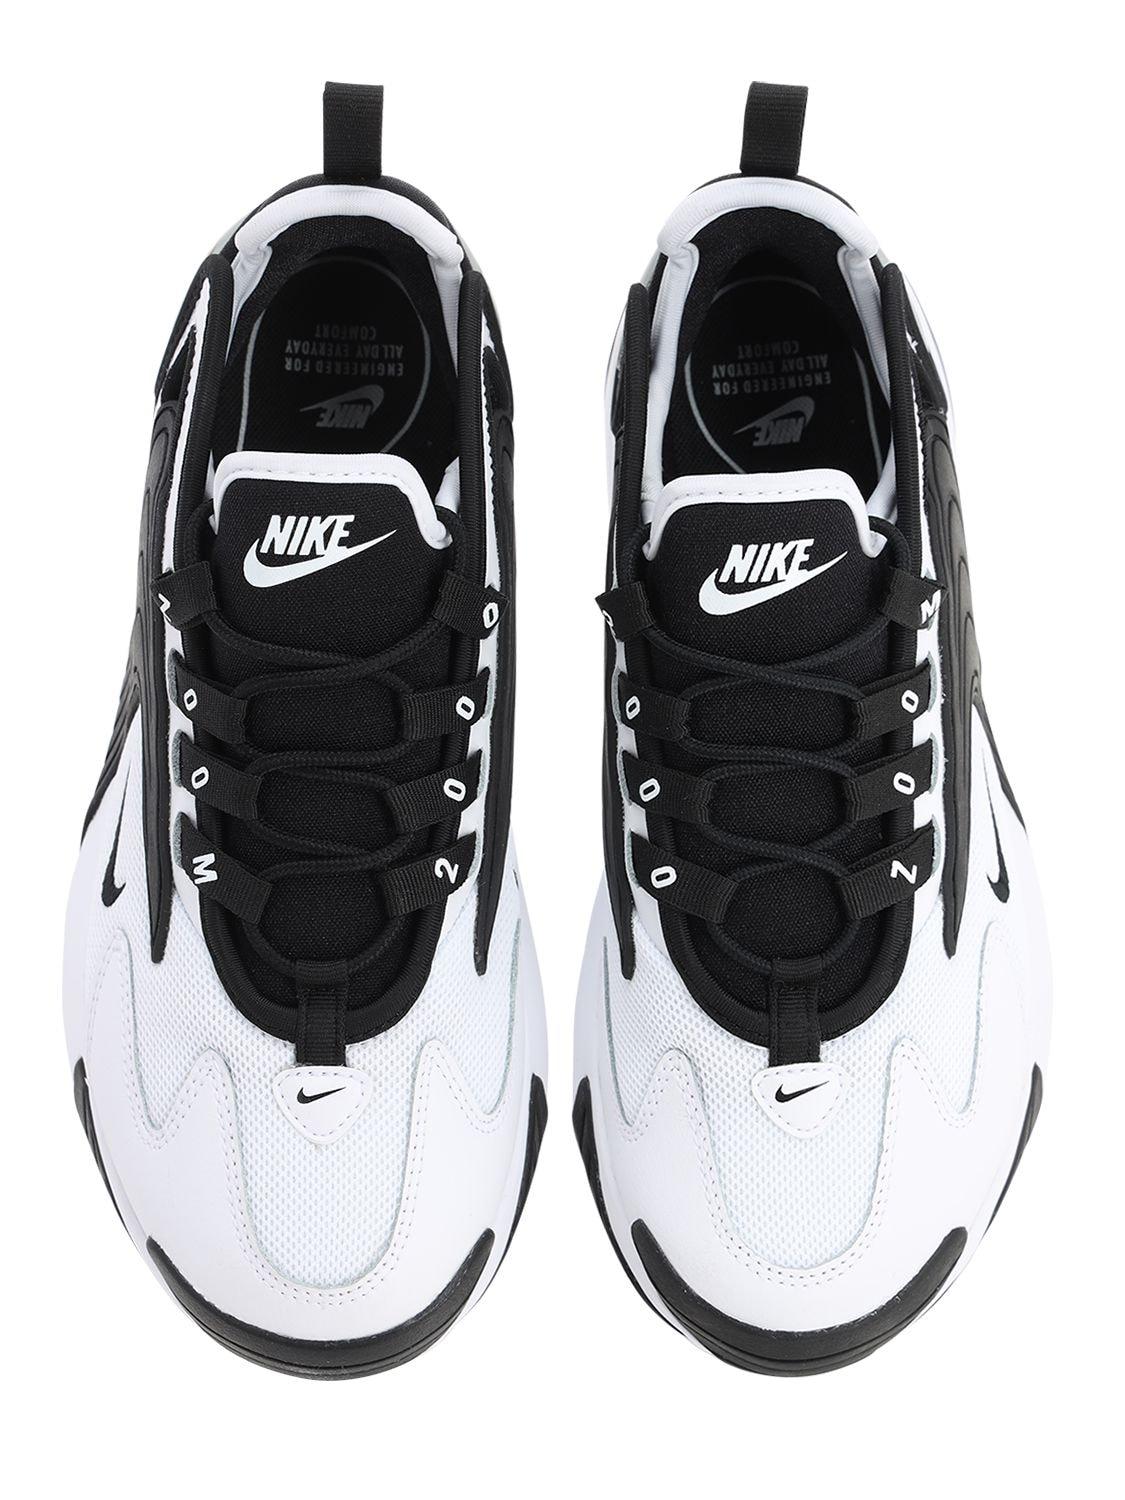 Nike Leather Zoom 2k in White/Black (Black) - Lyst